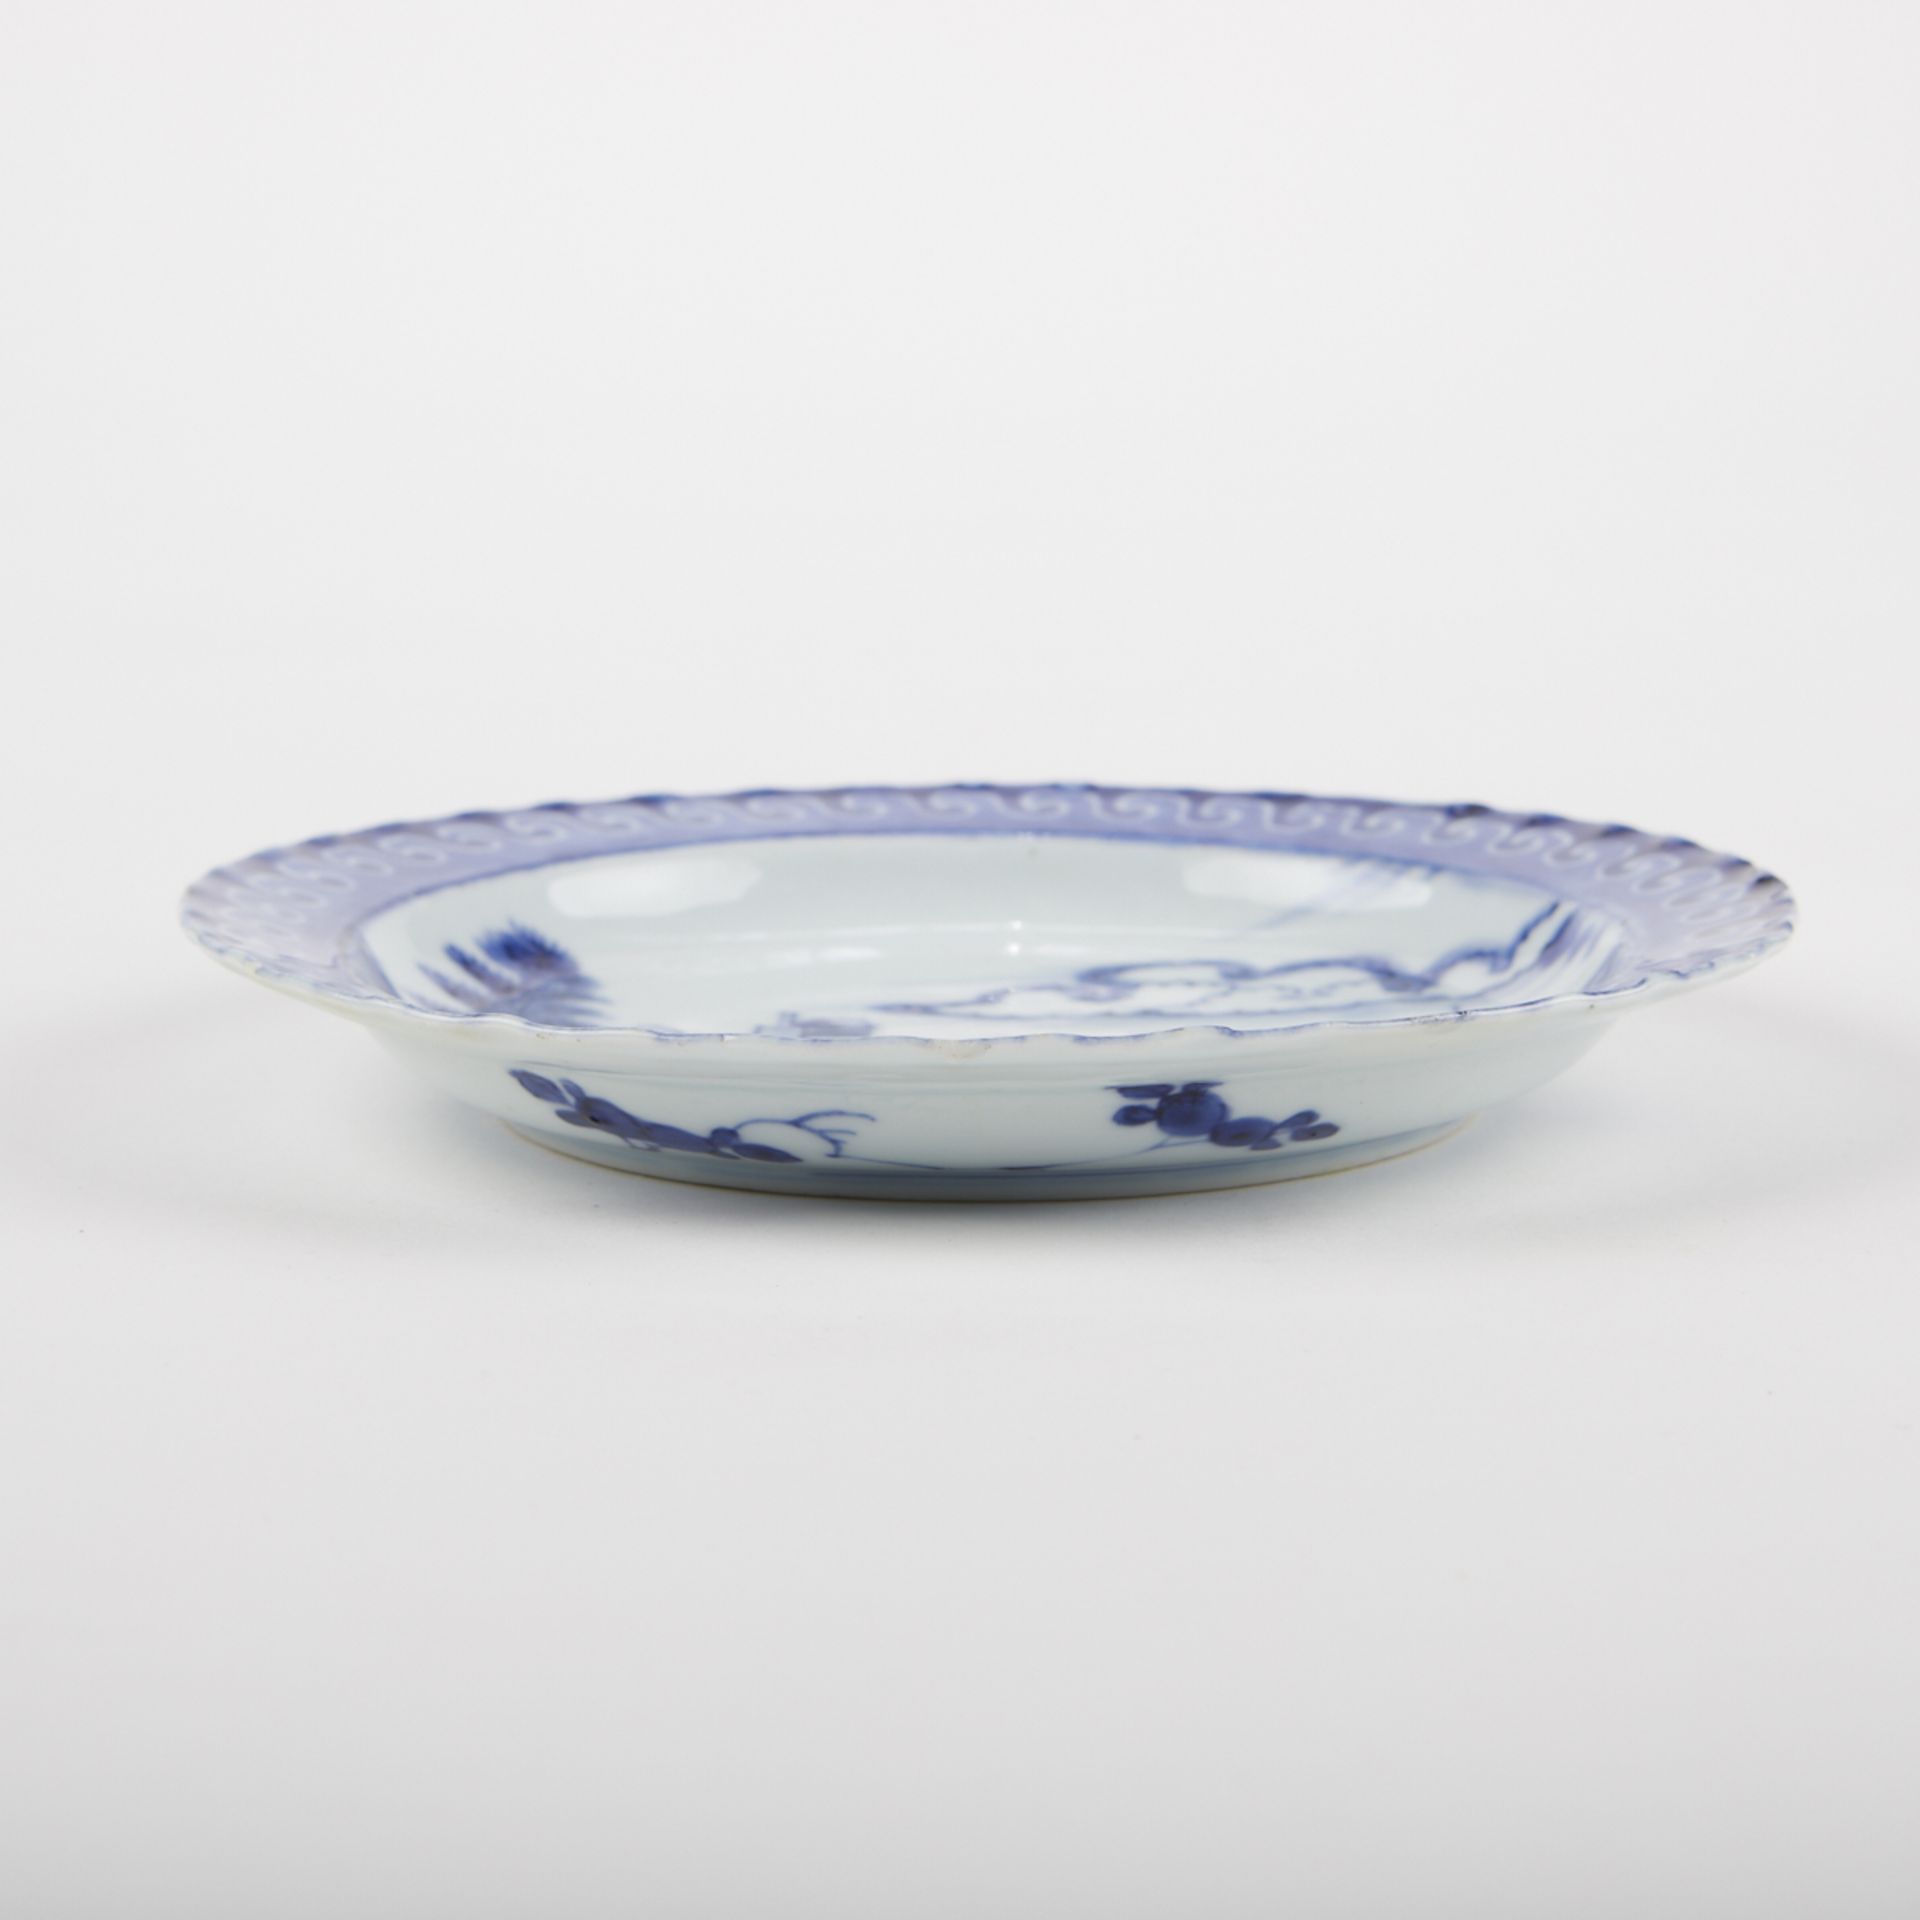 17th c. Blue & White "Deshima Island" Pattern Pottery Plate - Image 3 of 10